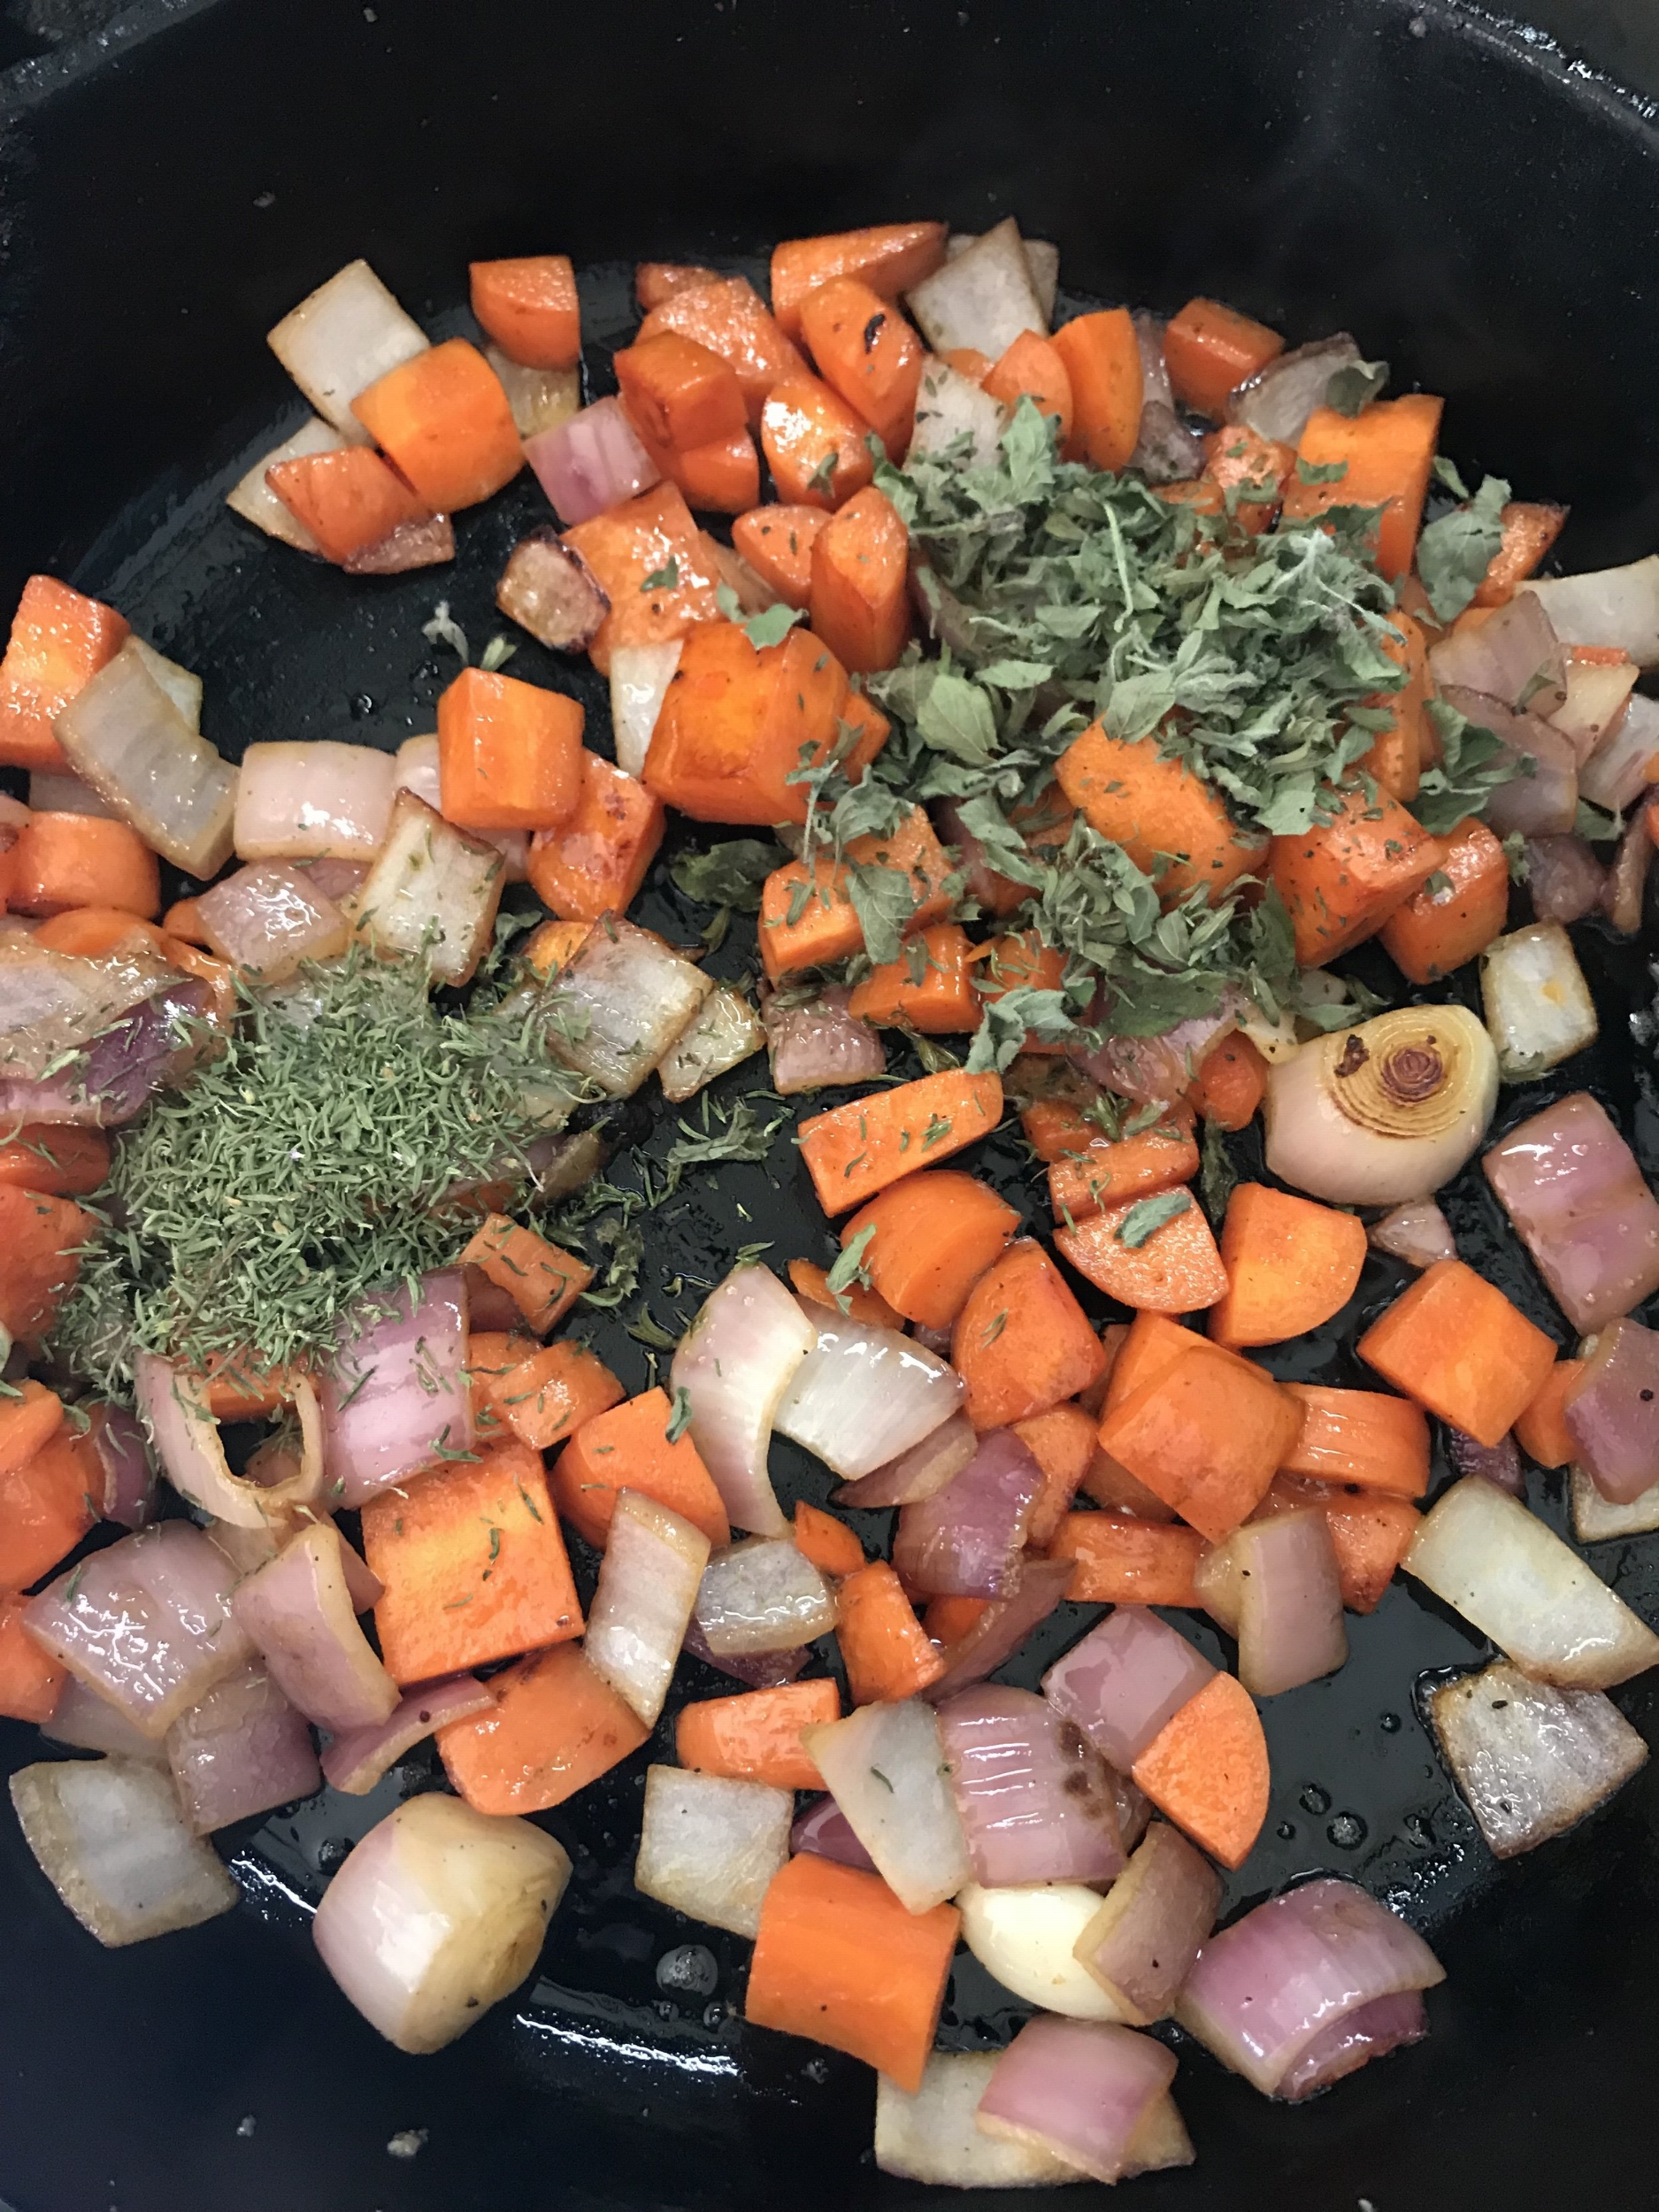 Add the herbs